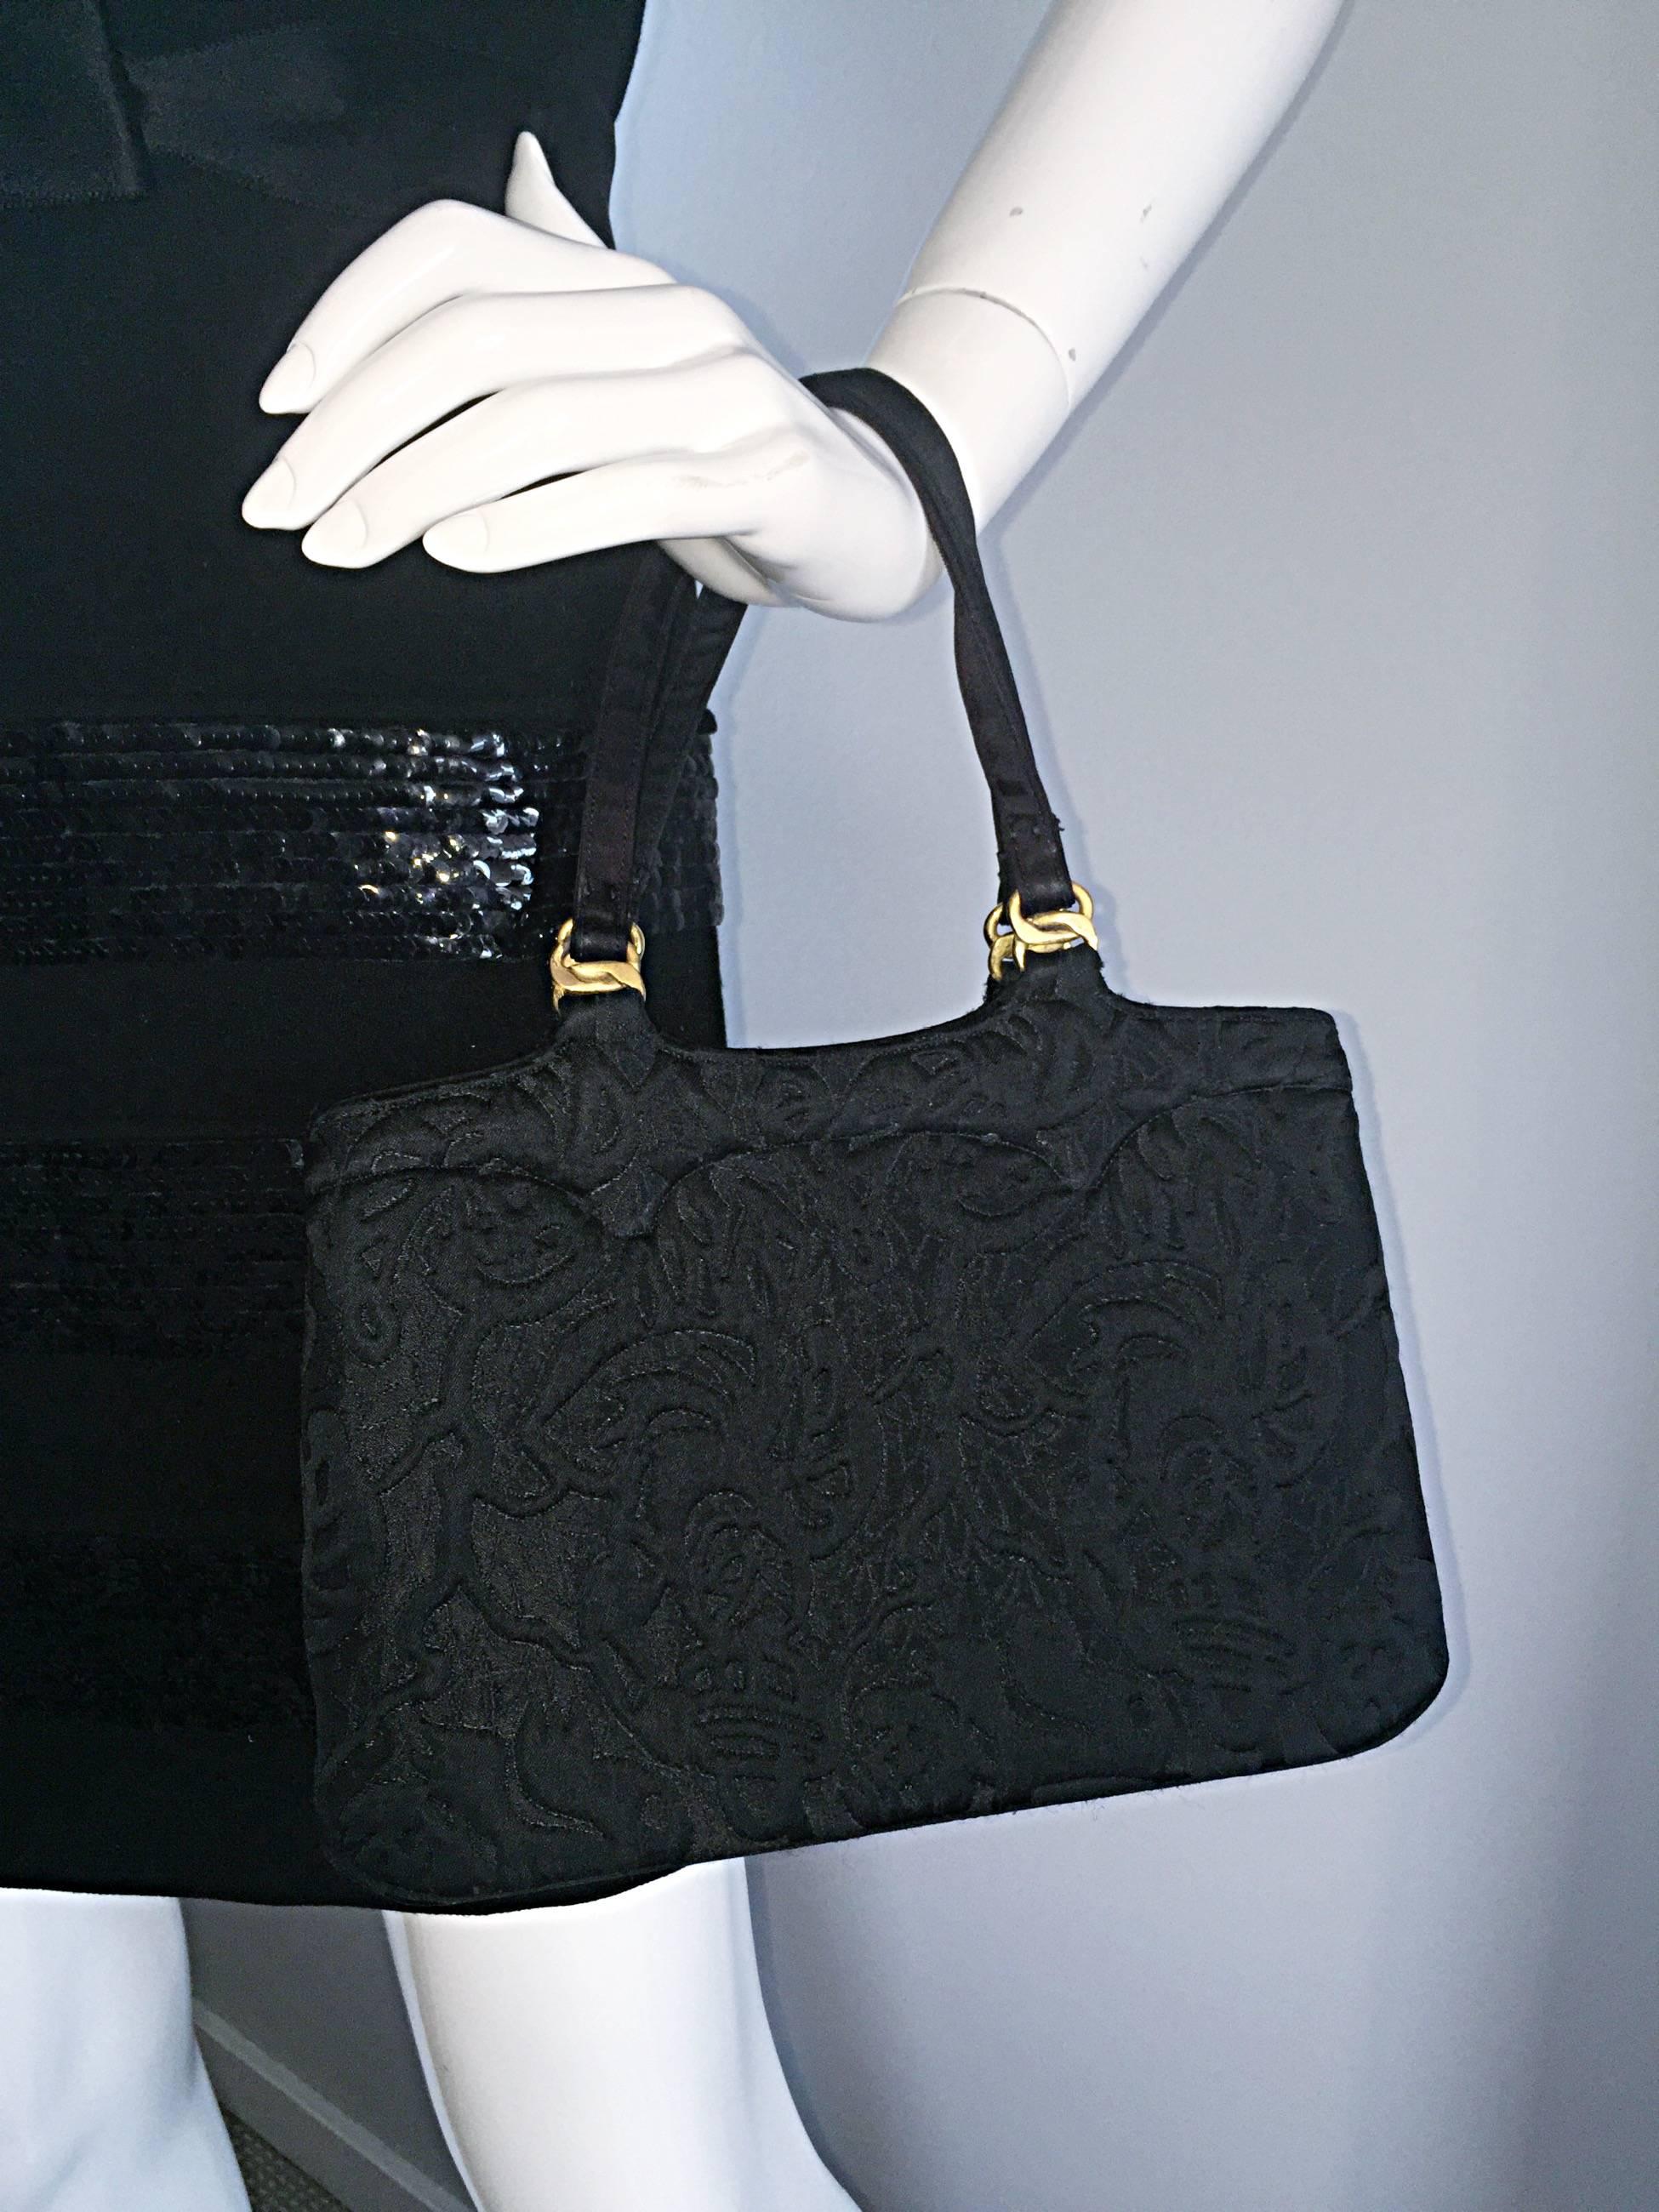 New 1950s Koret Vintage Black Embroidered Handbag Purse Bag w/ Pouch + Mirror 5